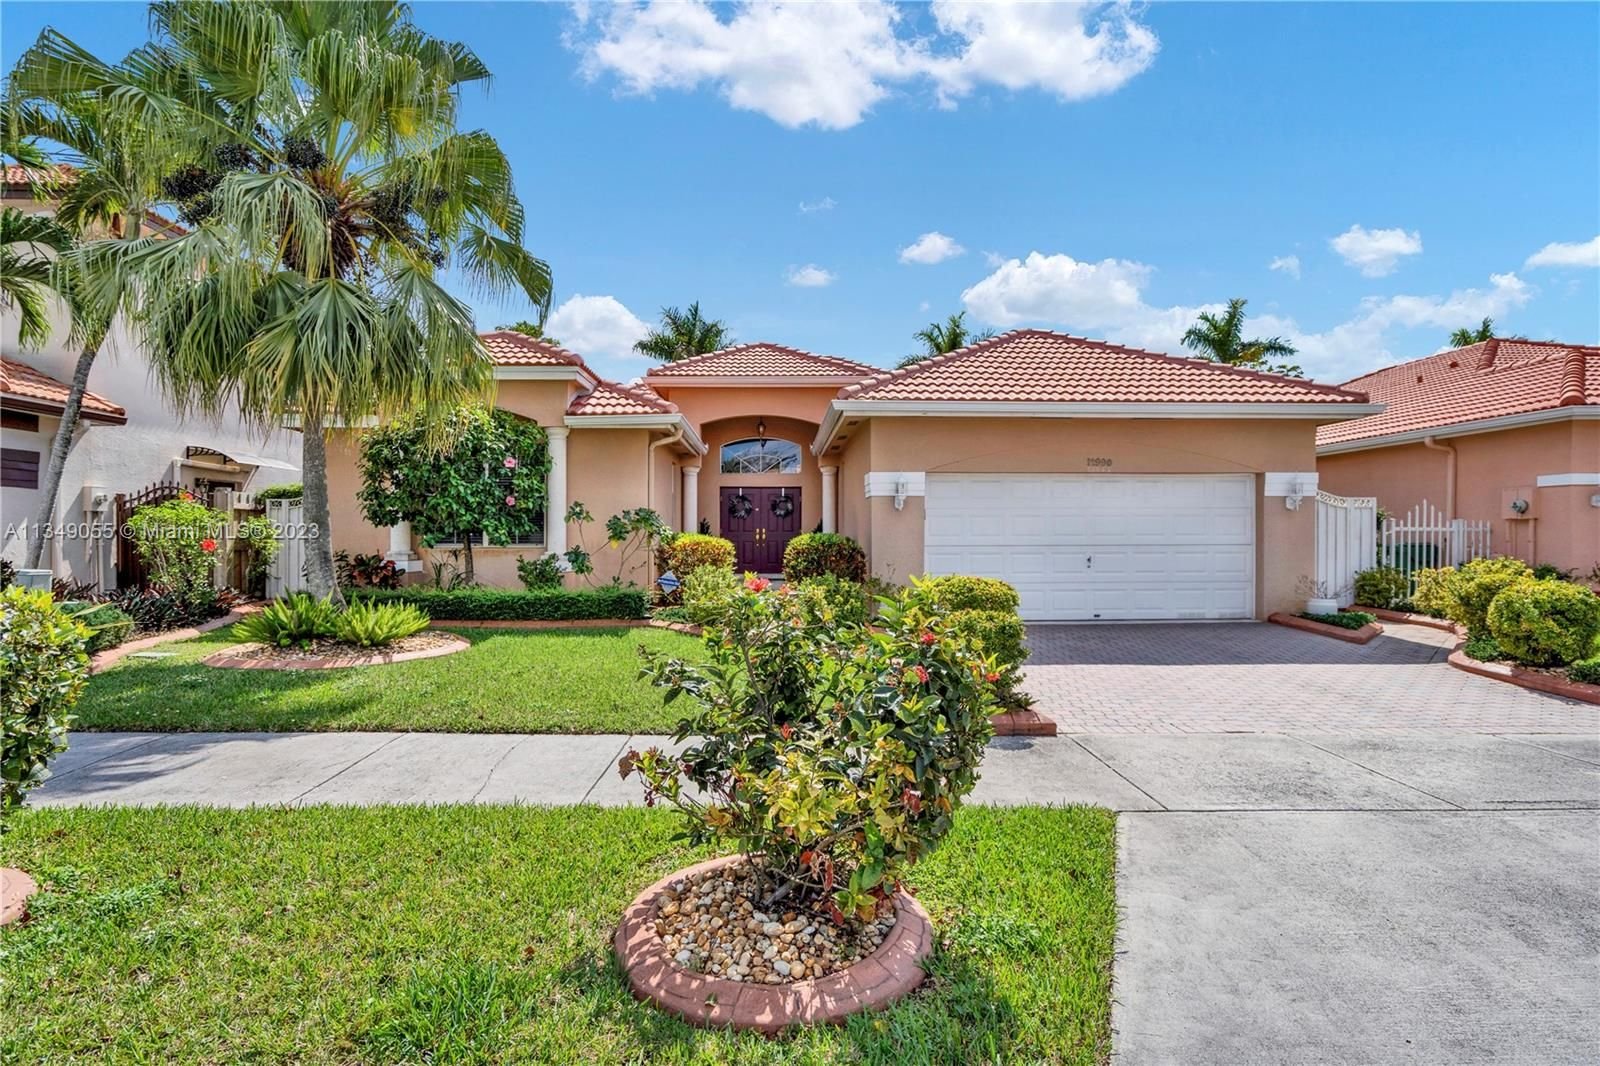 Real estate property located at 12990 6th Ter, Miami-Dade County, Miami, FL